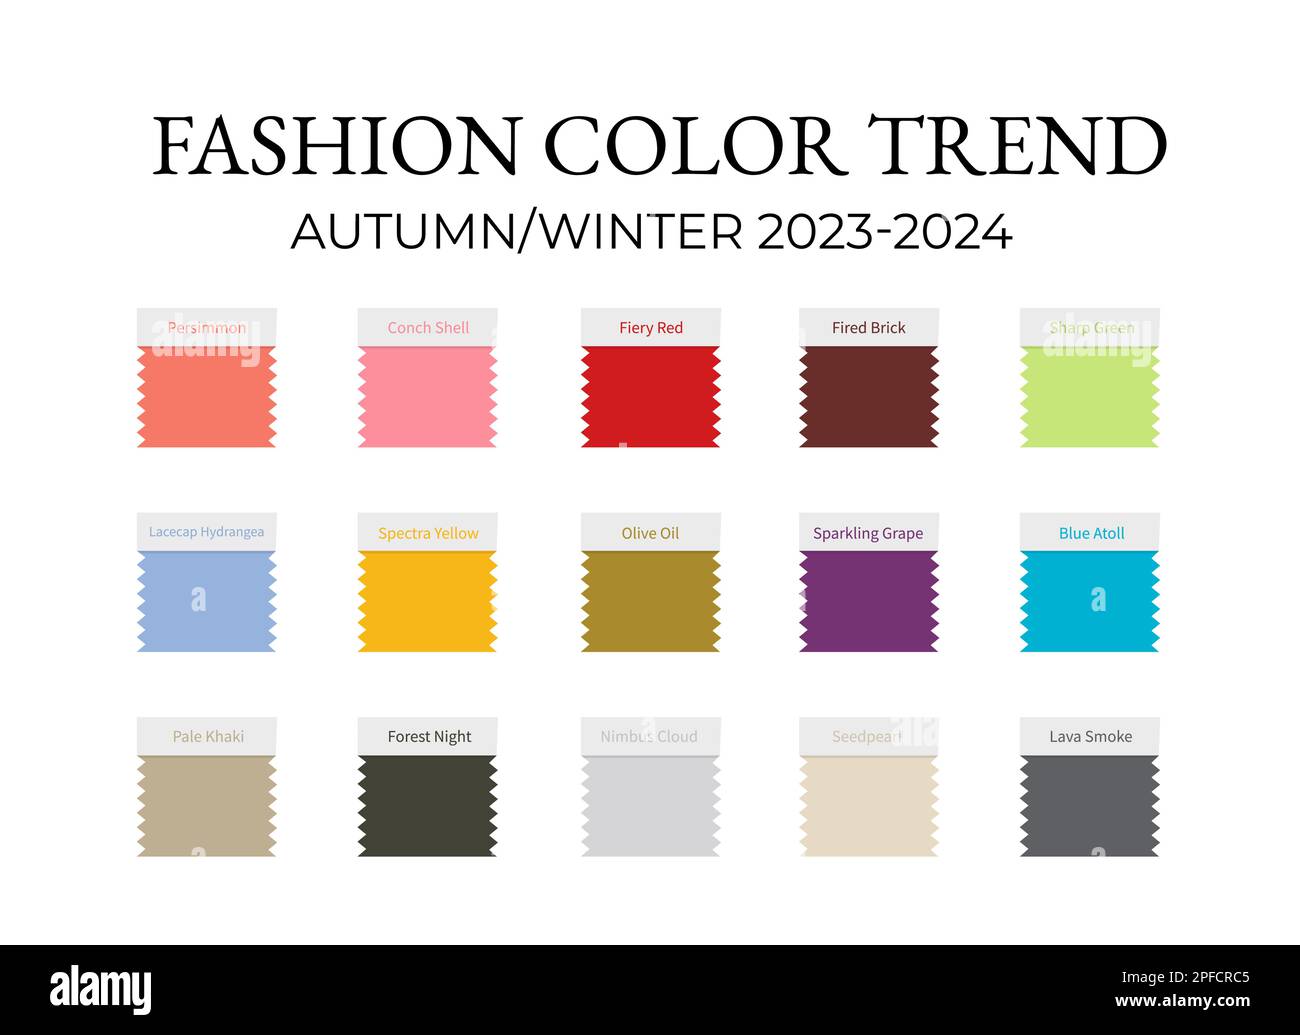 Summer 2024 Color Trends Fashion Ardyth Mireielle